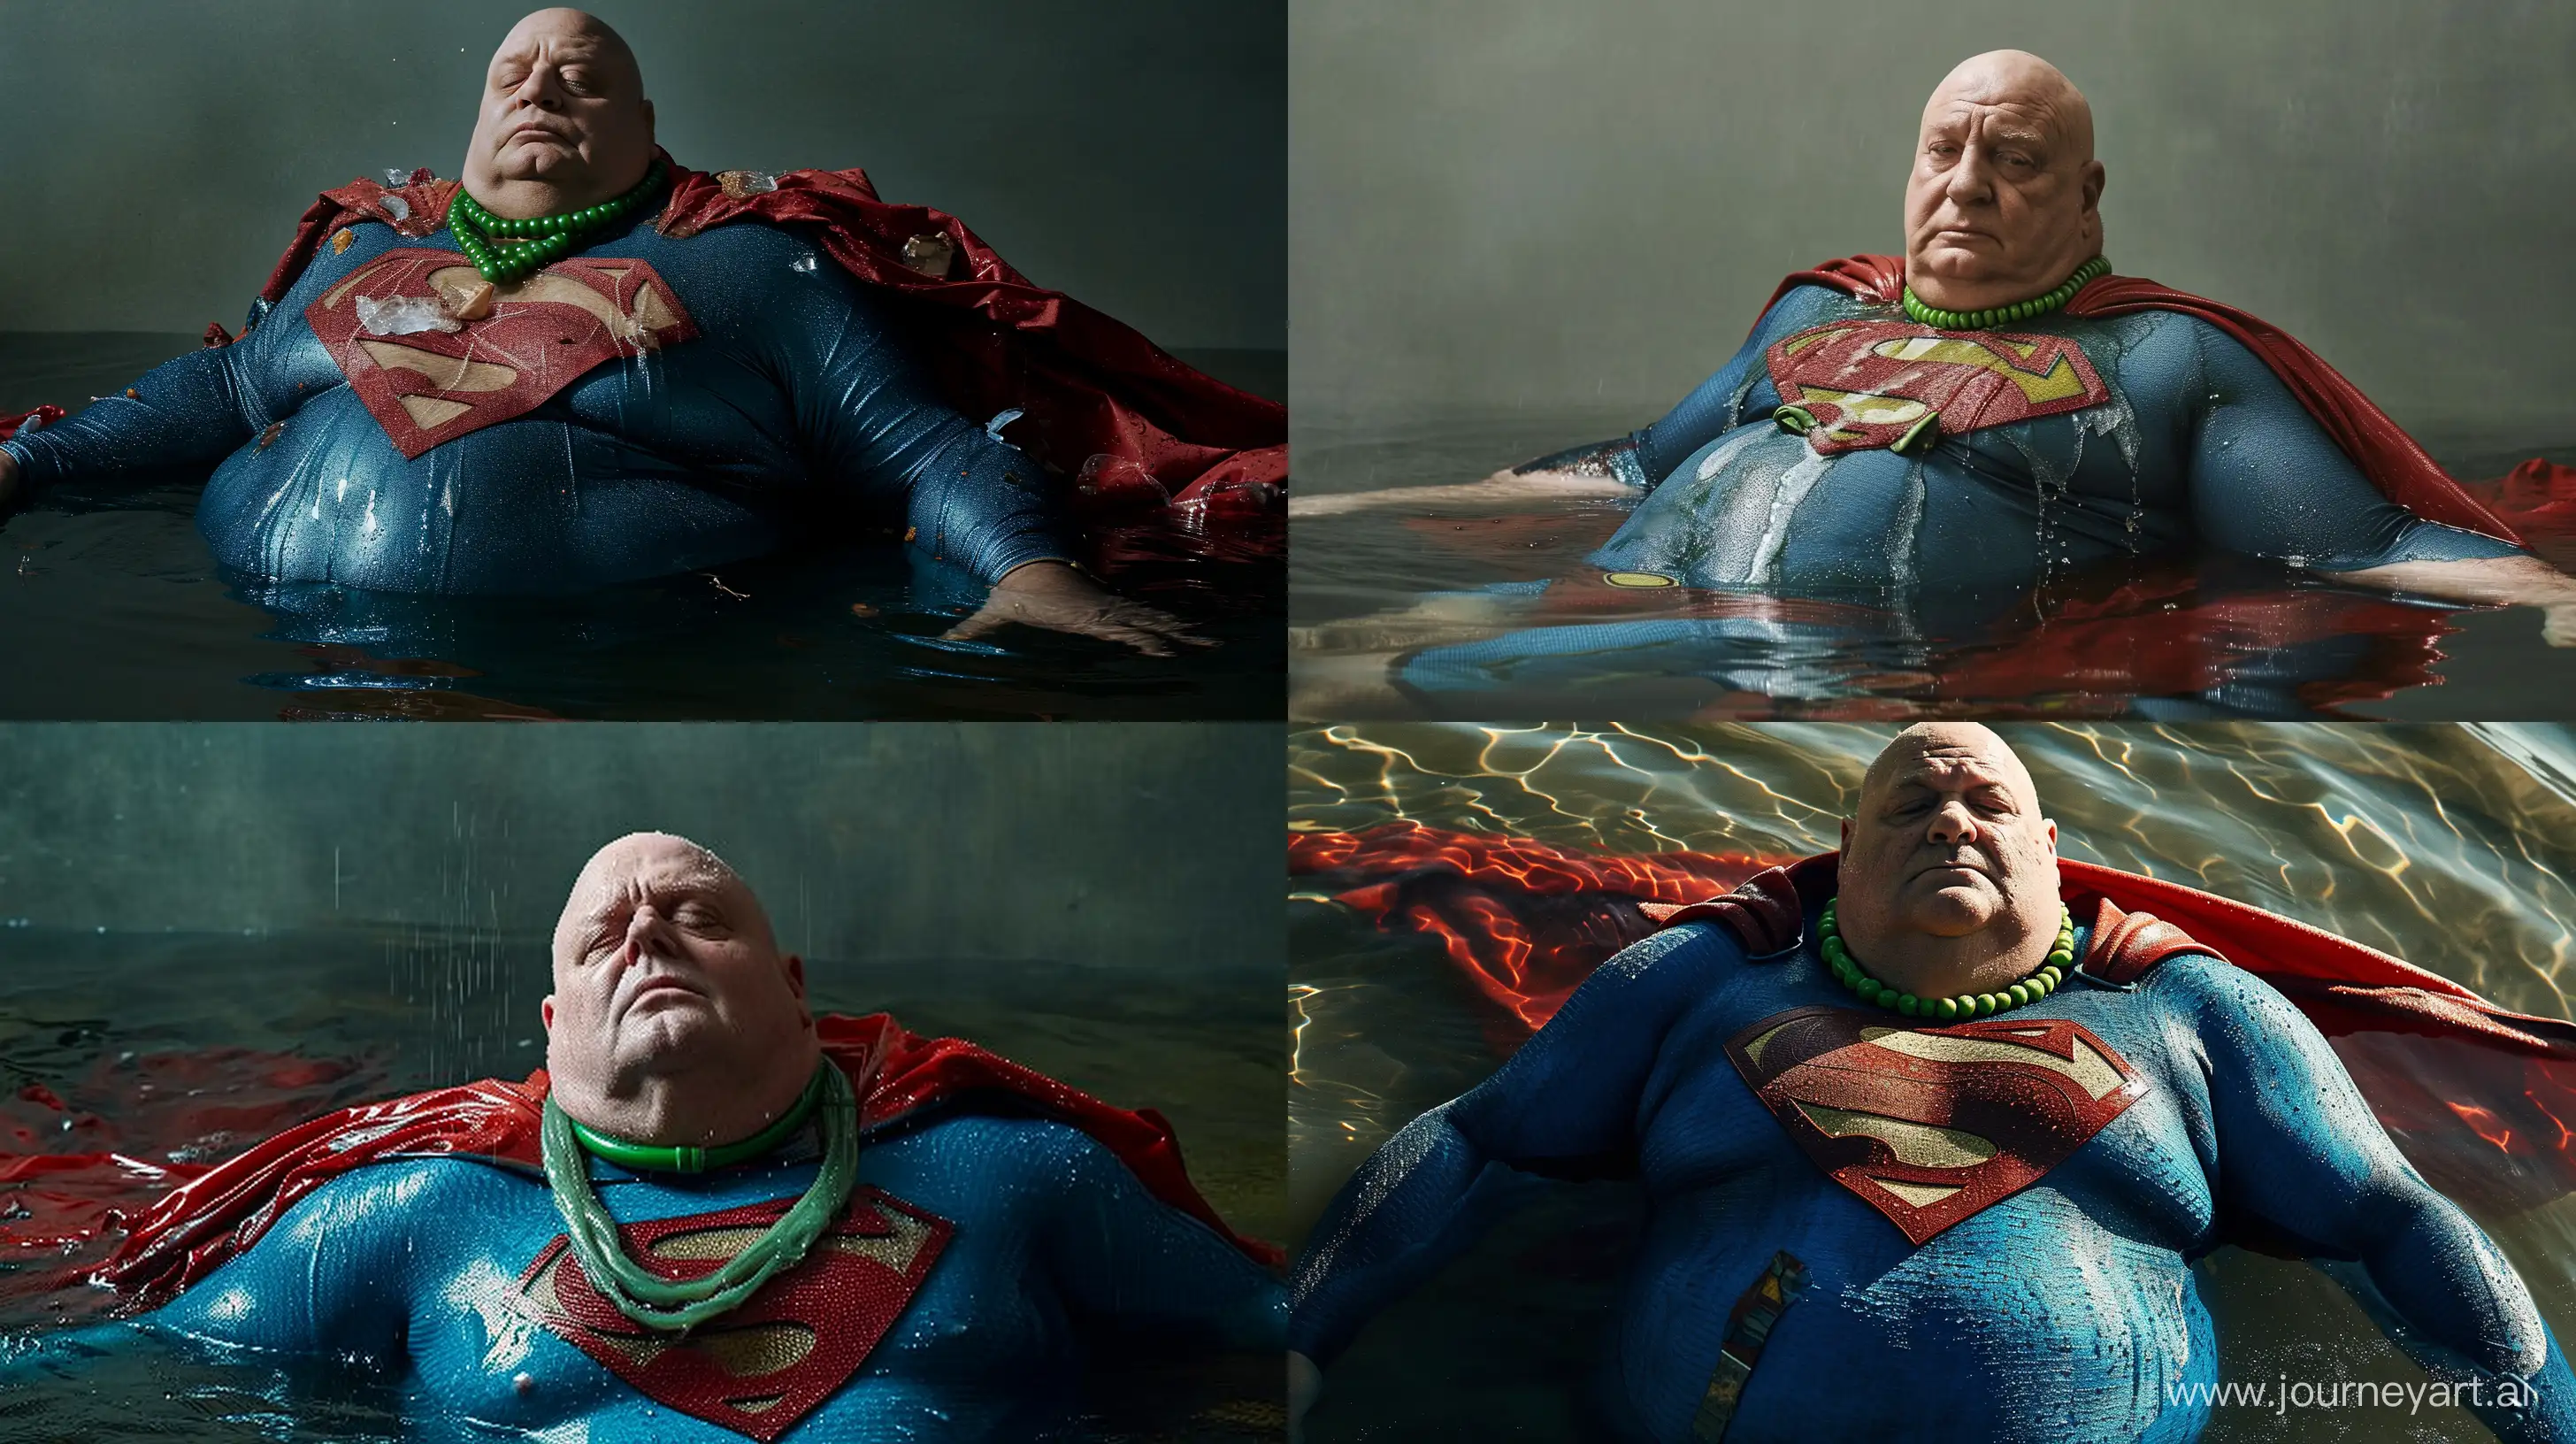 Elderly-Superman-Enjoying-a-Refreshing-Swim-with-Vibrant-Style